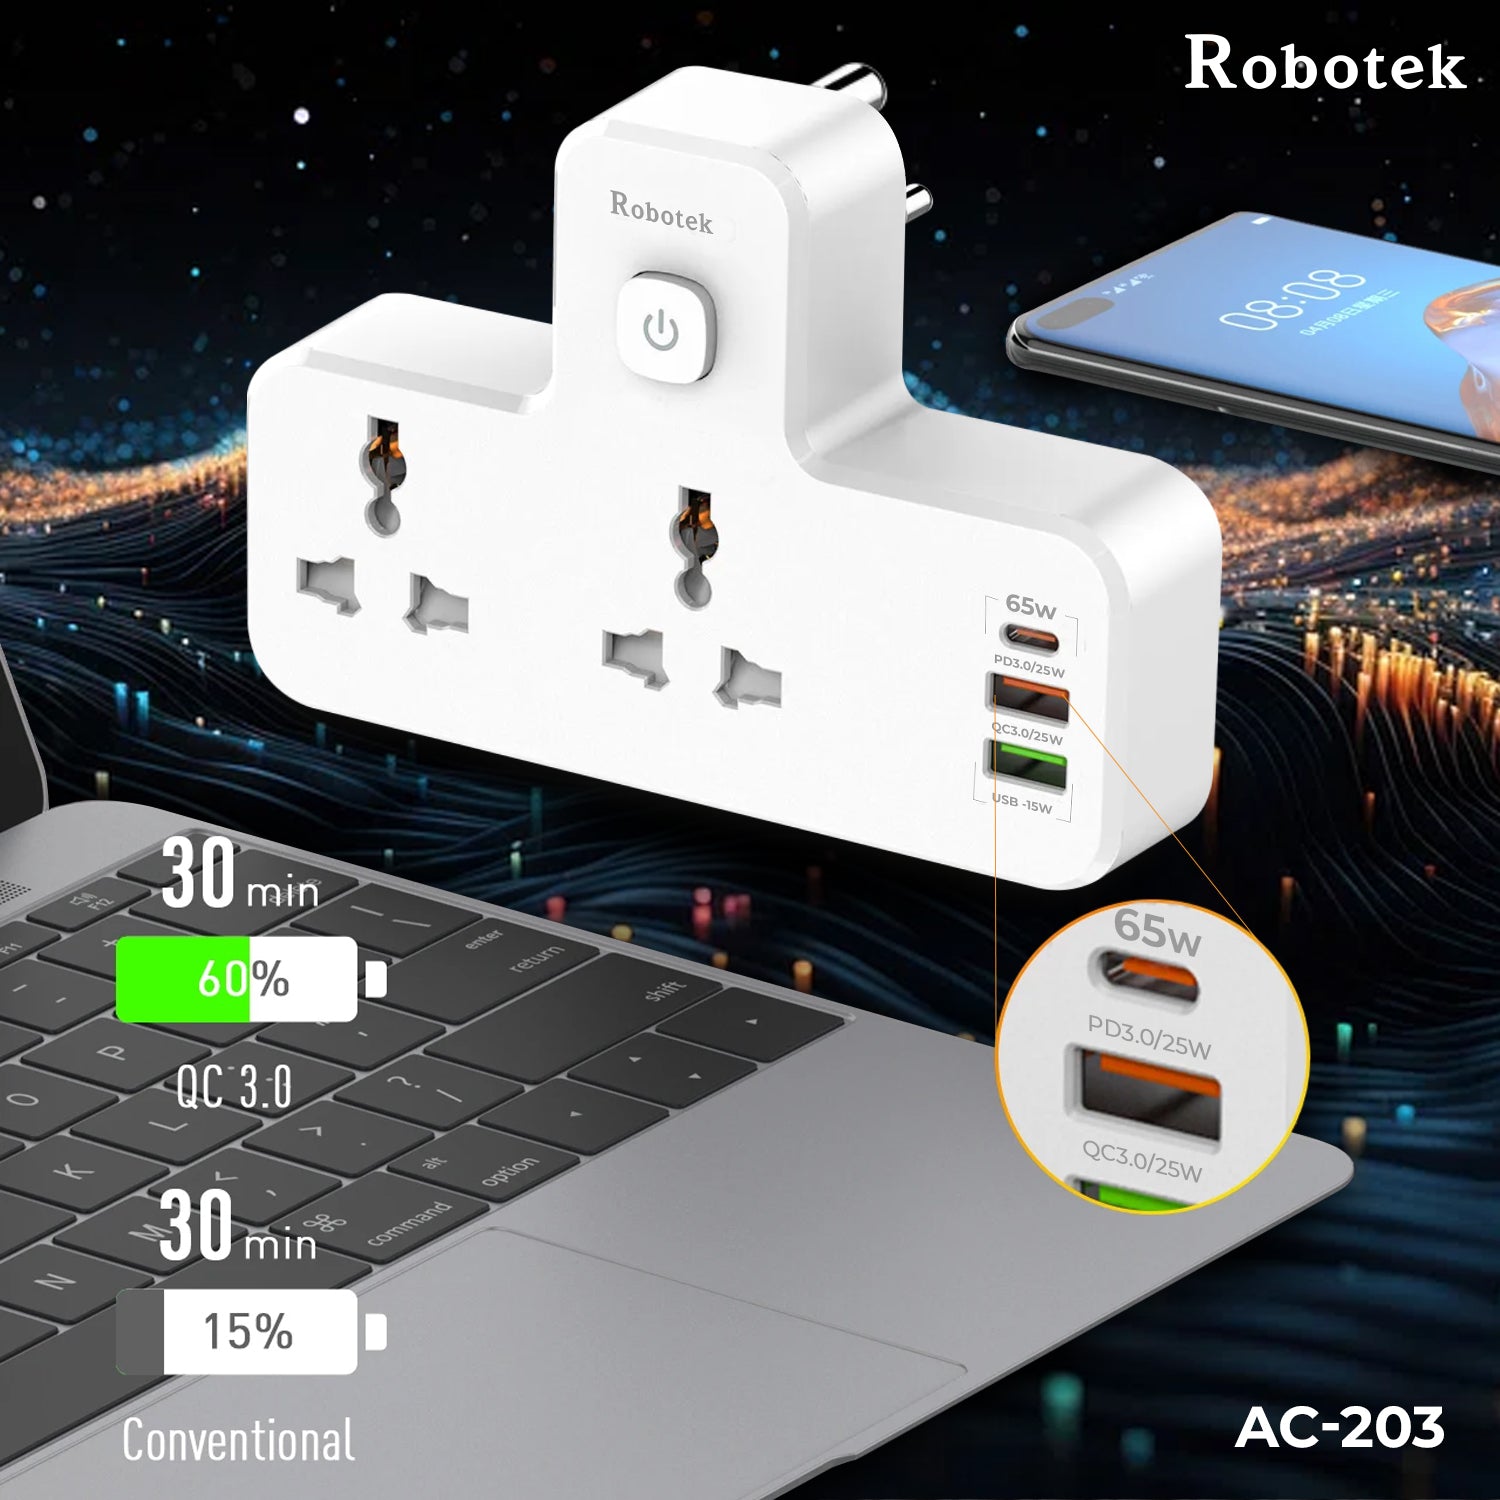 Robotek AC-203 Multi Plug with PD Type-C & 2 USB QC-3.0 Ports